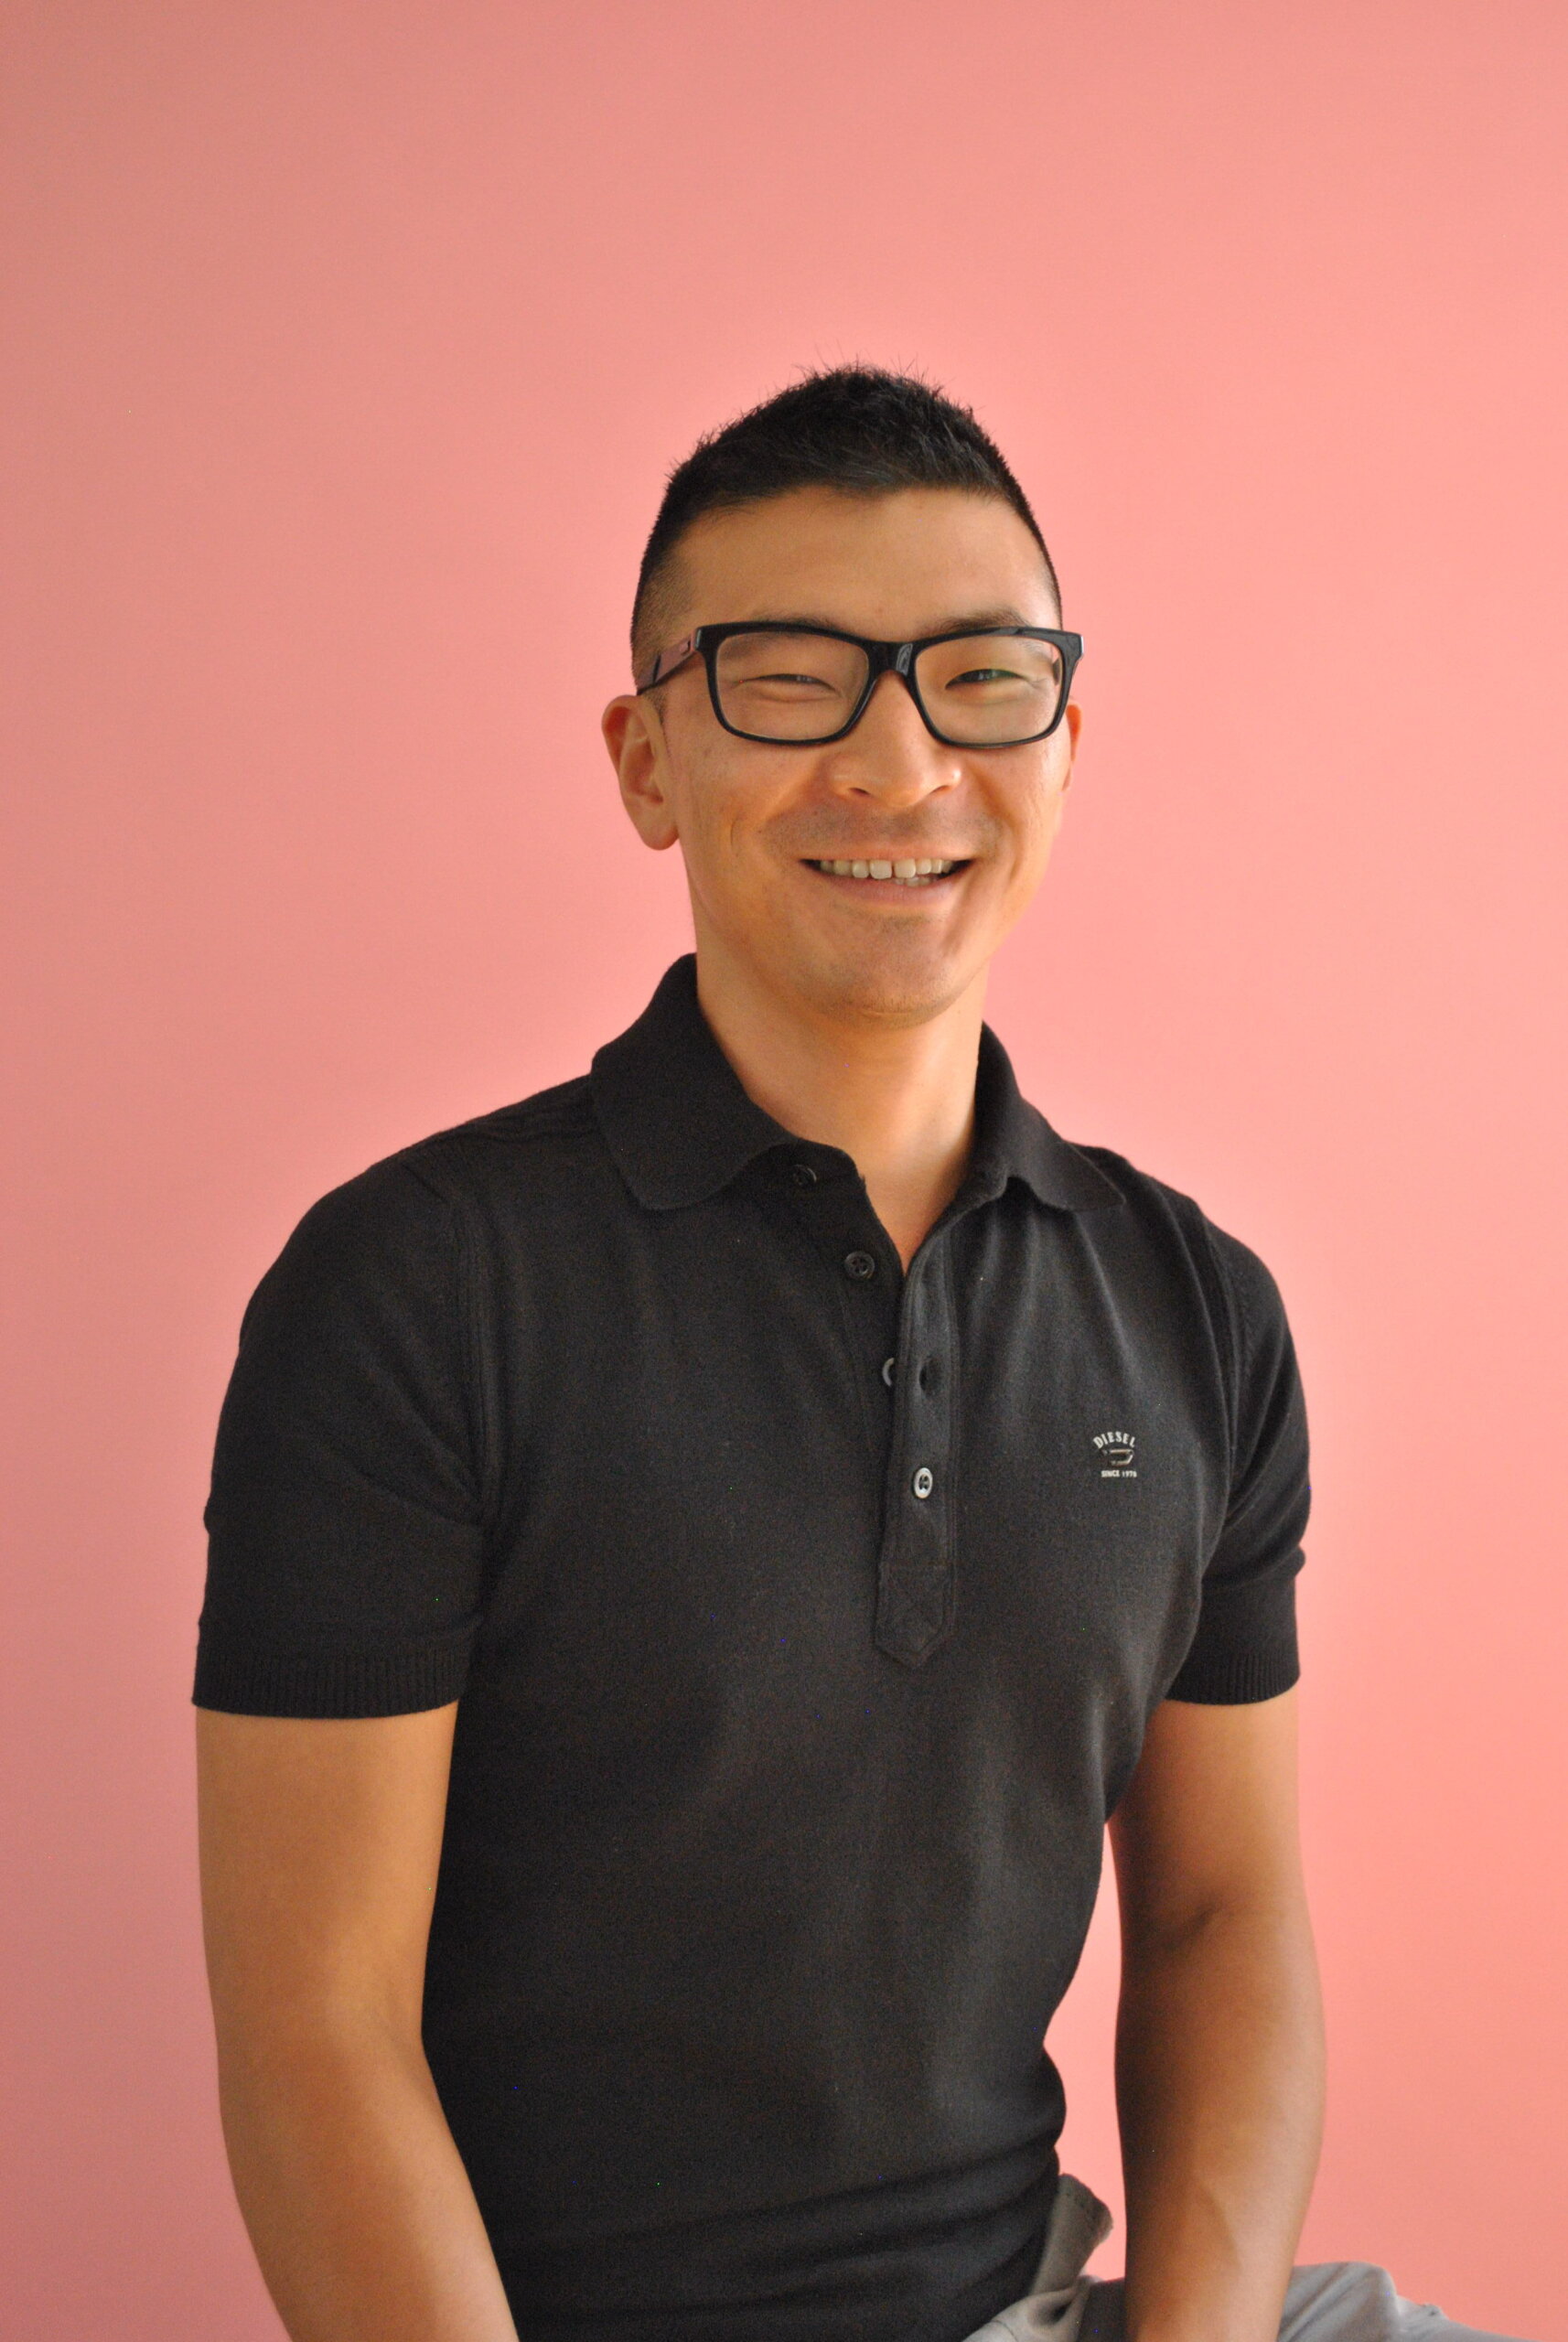 Michael Kwag of LGBTQ2S+ organization CBRC